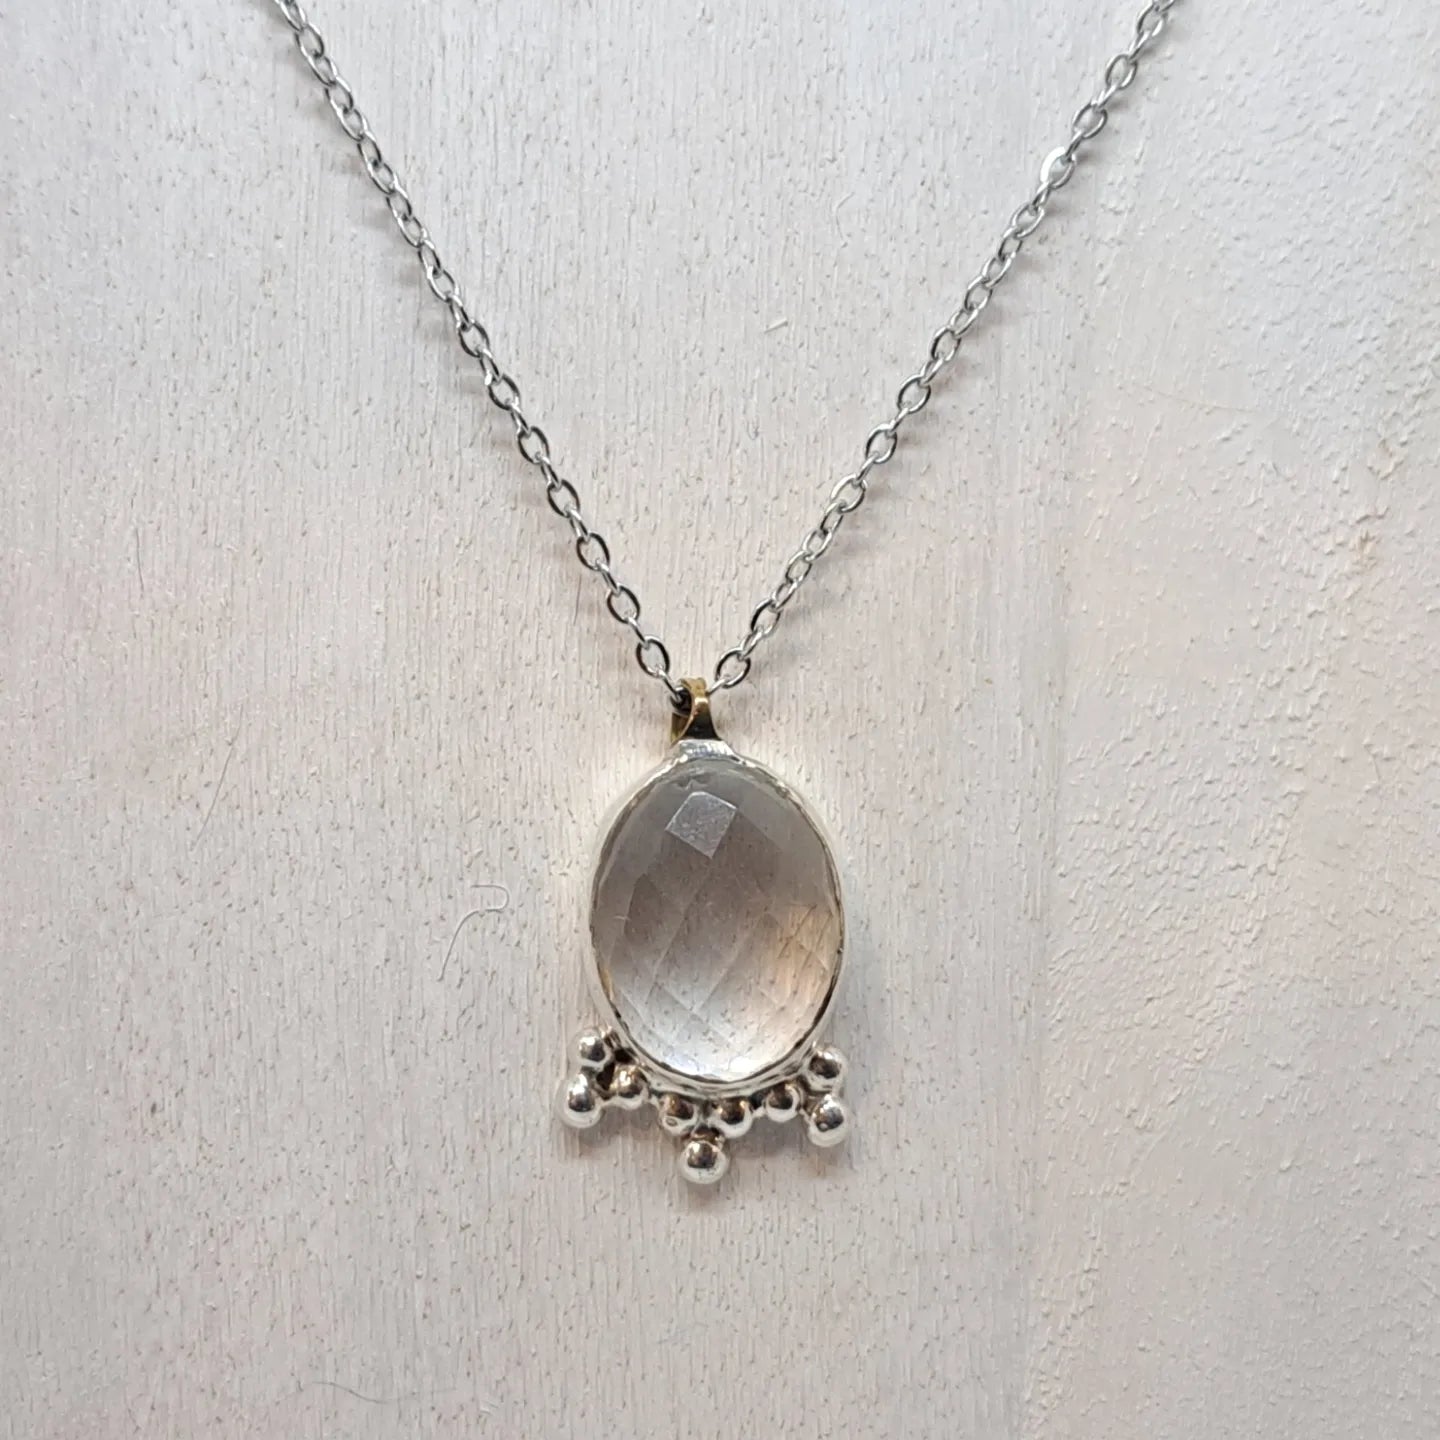 Clear quartz and silver pendant